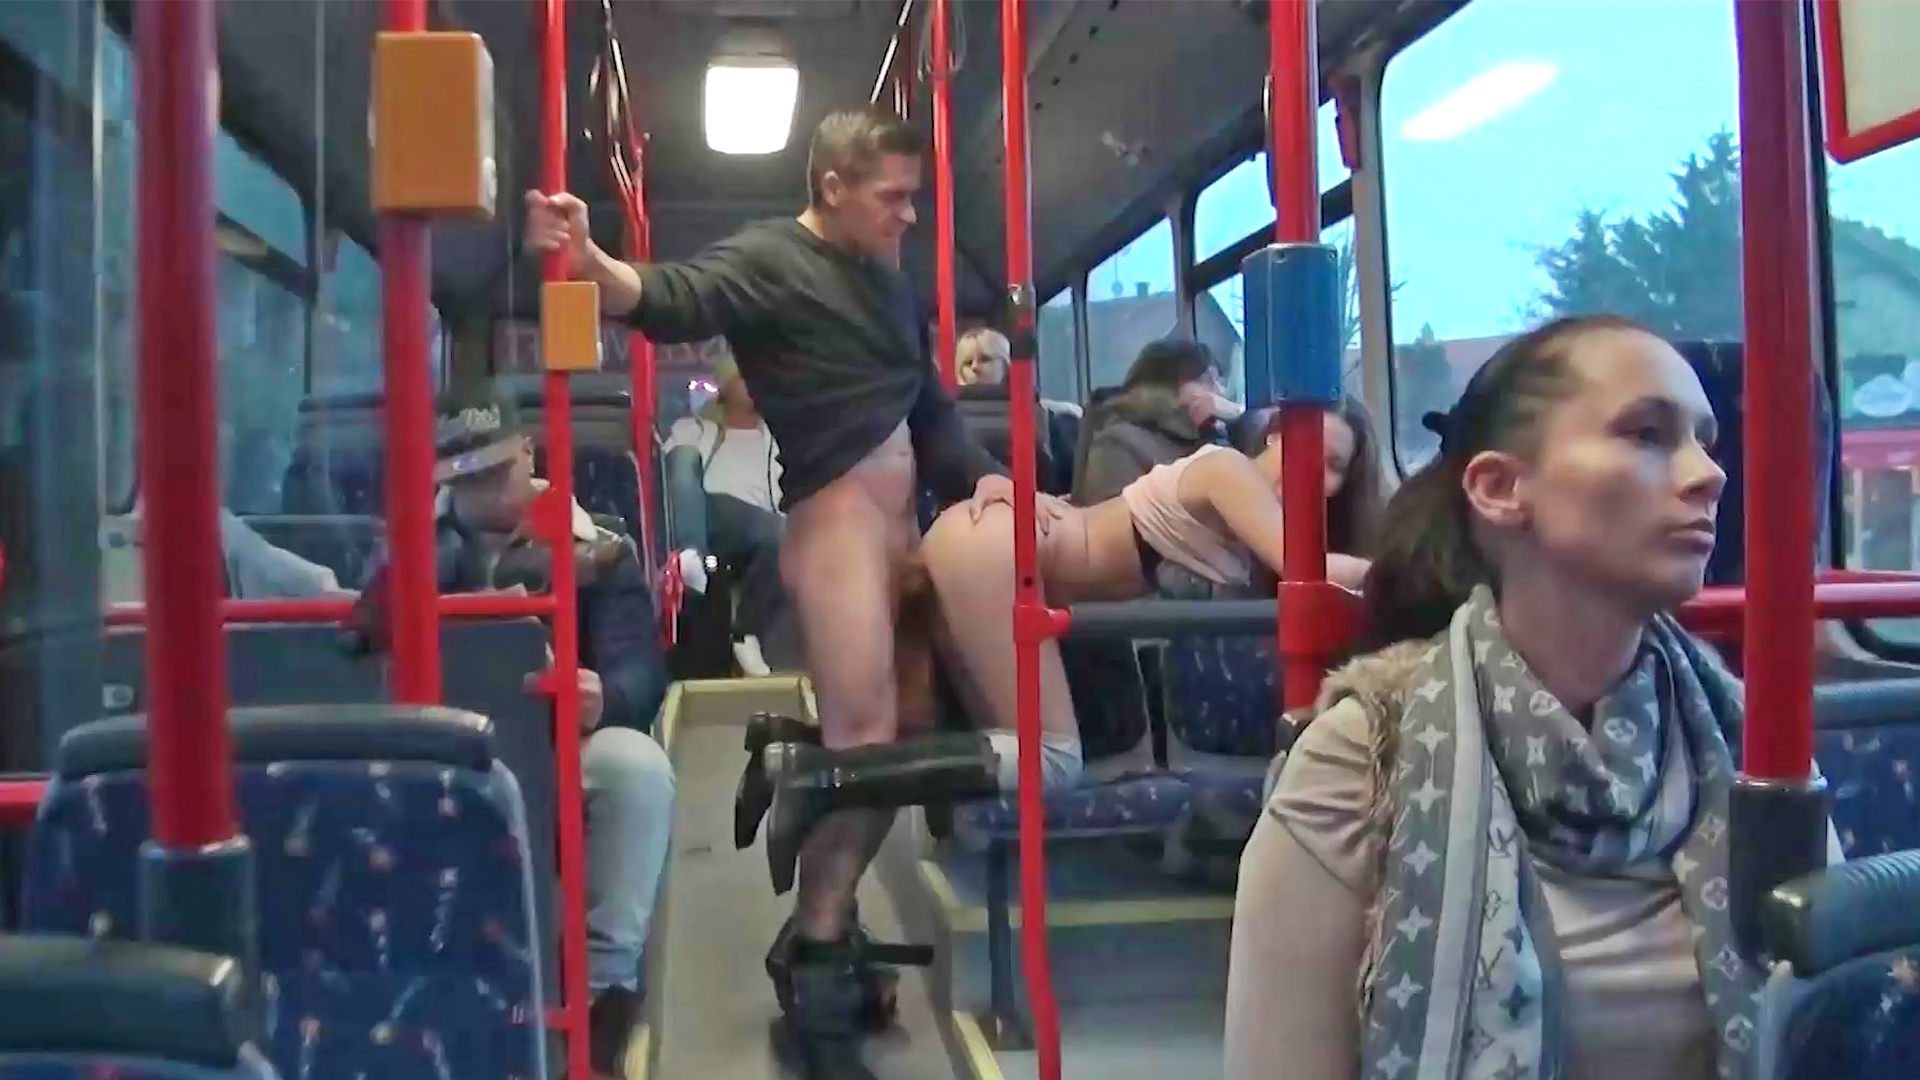 Sex on bus